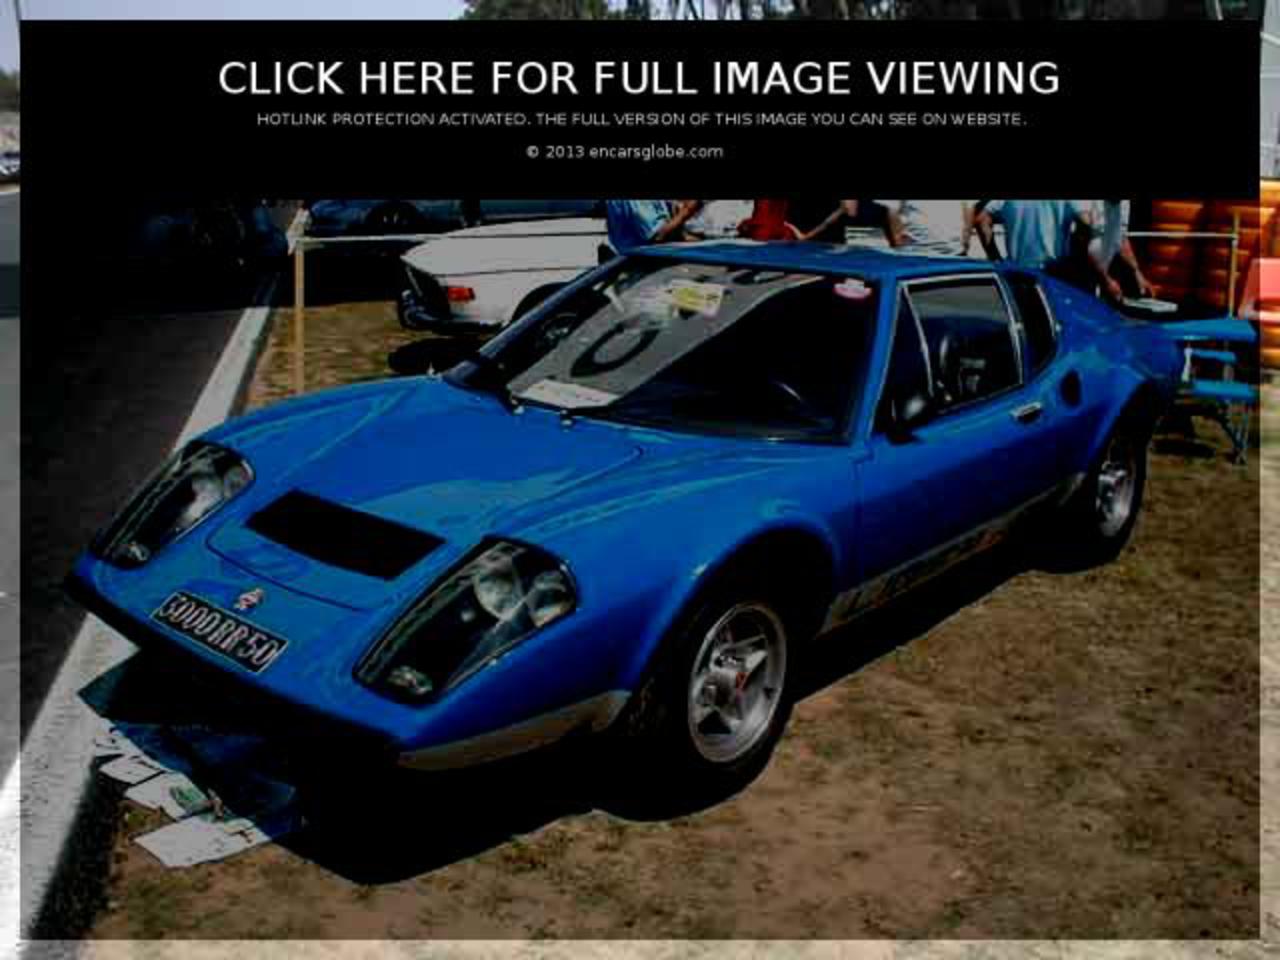 Ligier JS2: Description of the model, photo gallery, modifications ...